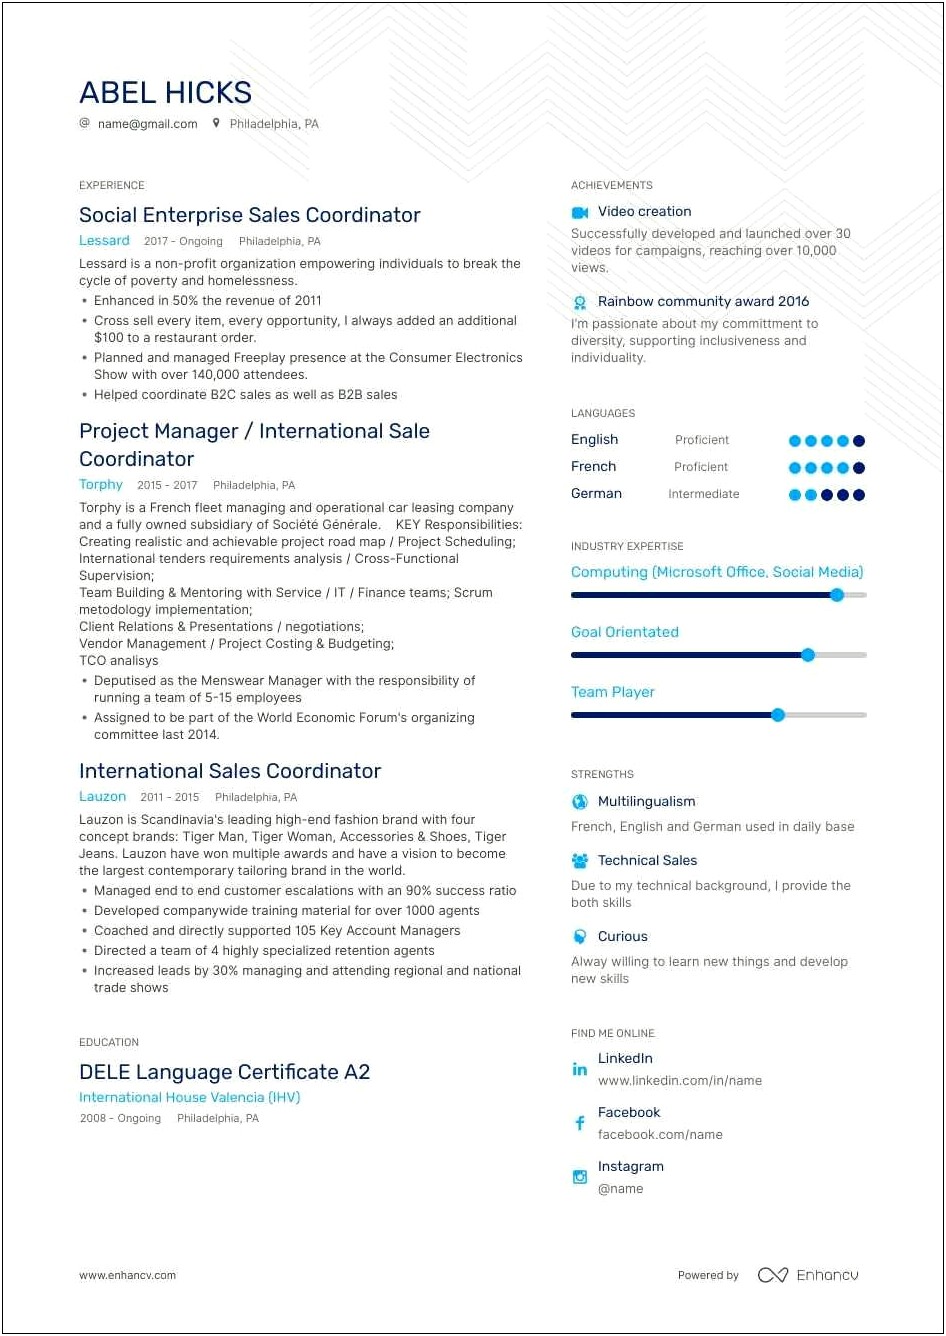 Leasing Application Specialist Job Description For Resume